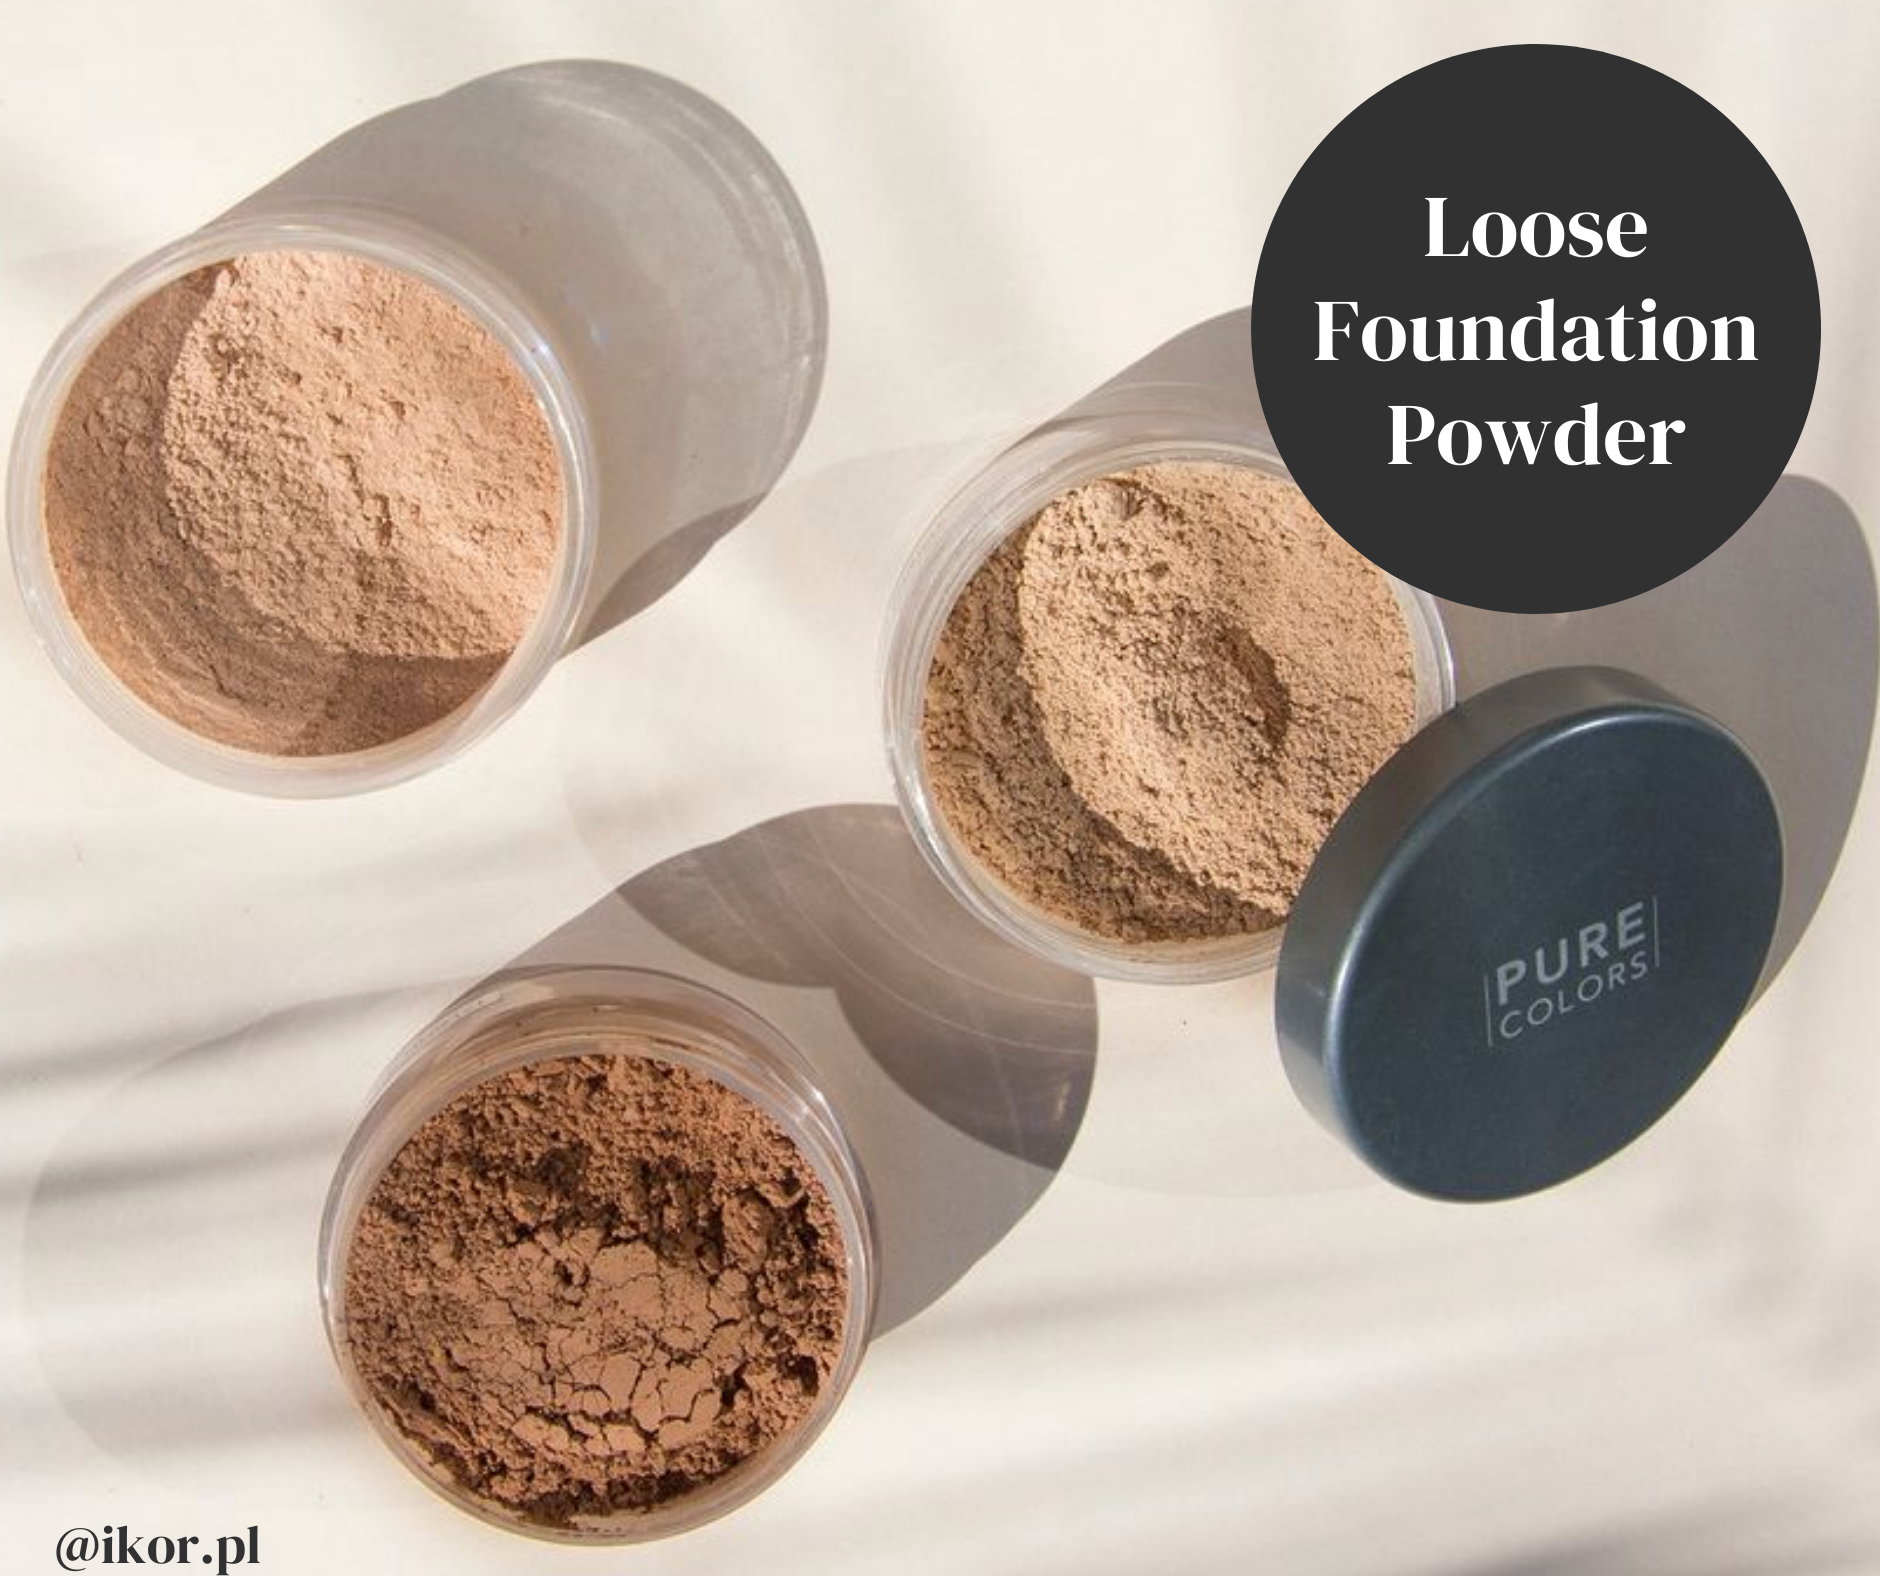 8 In 1 Loose Foundation Powder